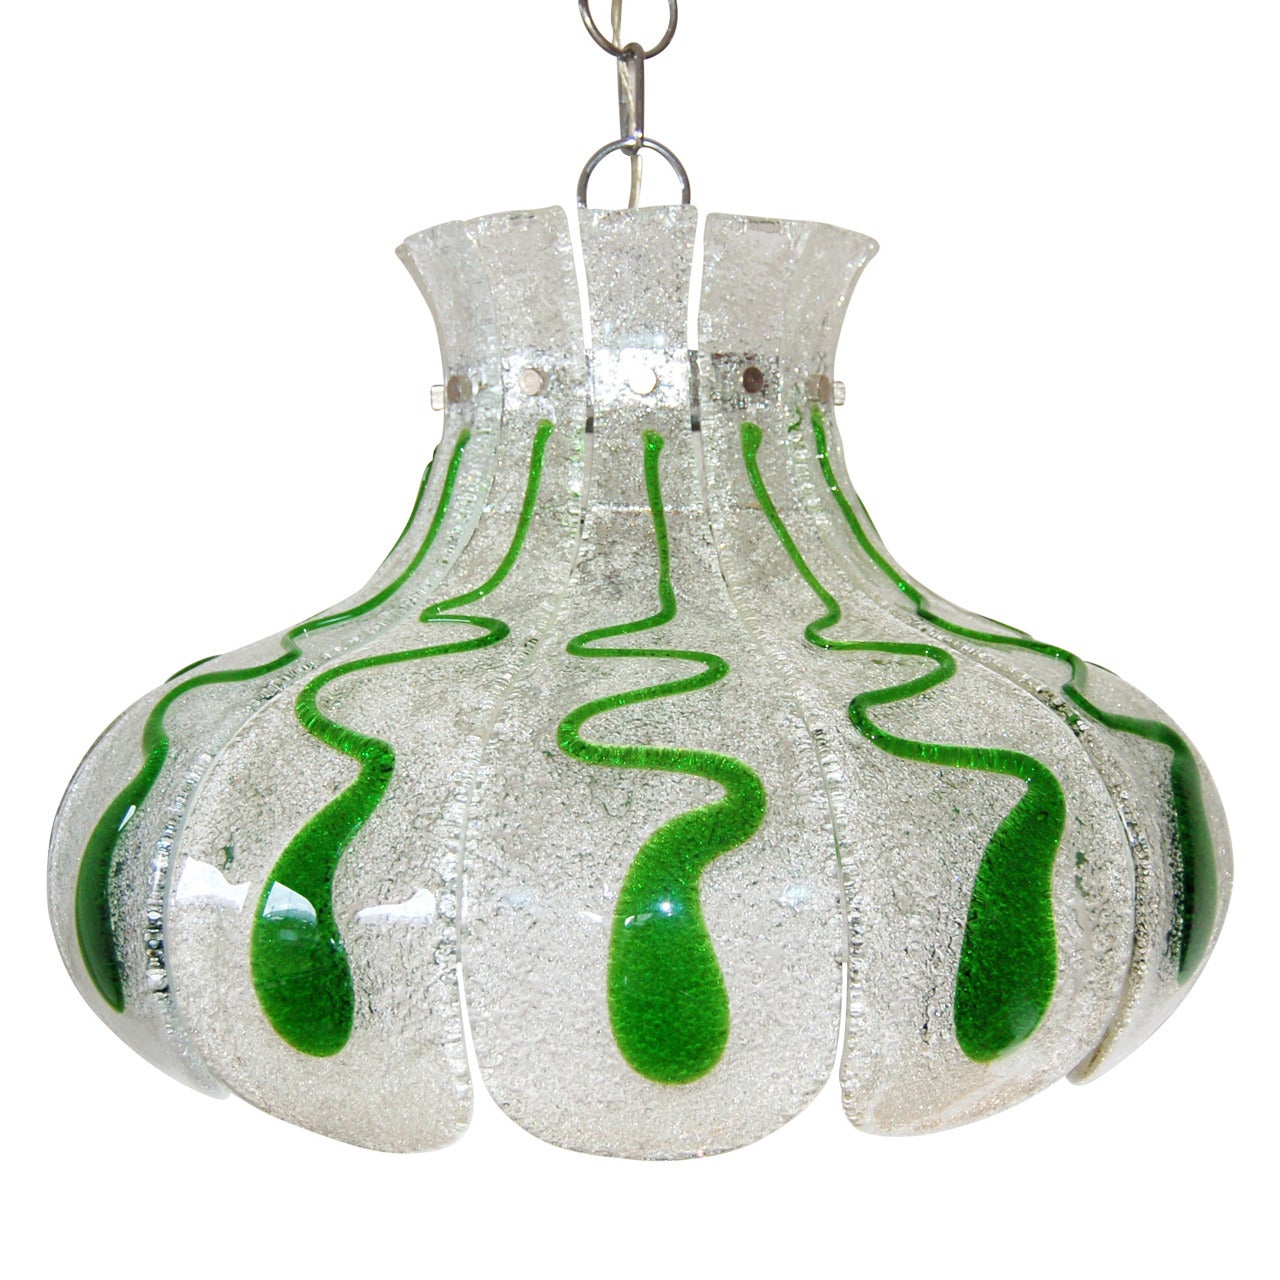 Carlo Nason Glass Lamp Pendant Chandelier, Green Glass, 1970 